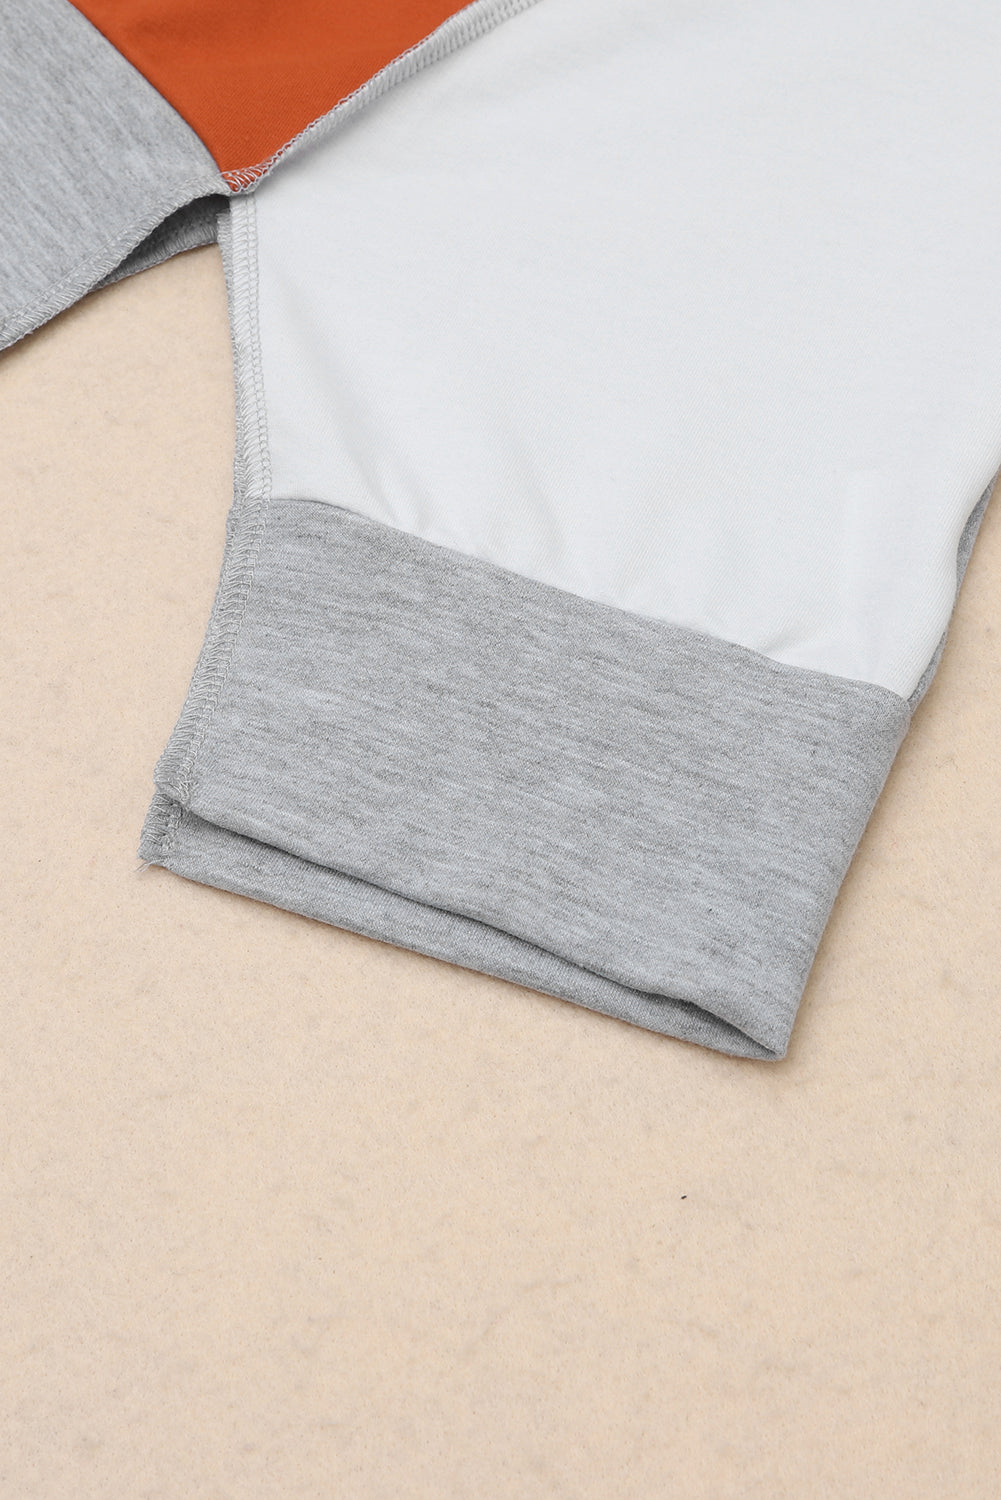 Colorblock Stitching Irregular Hem Long Sleeve Top